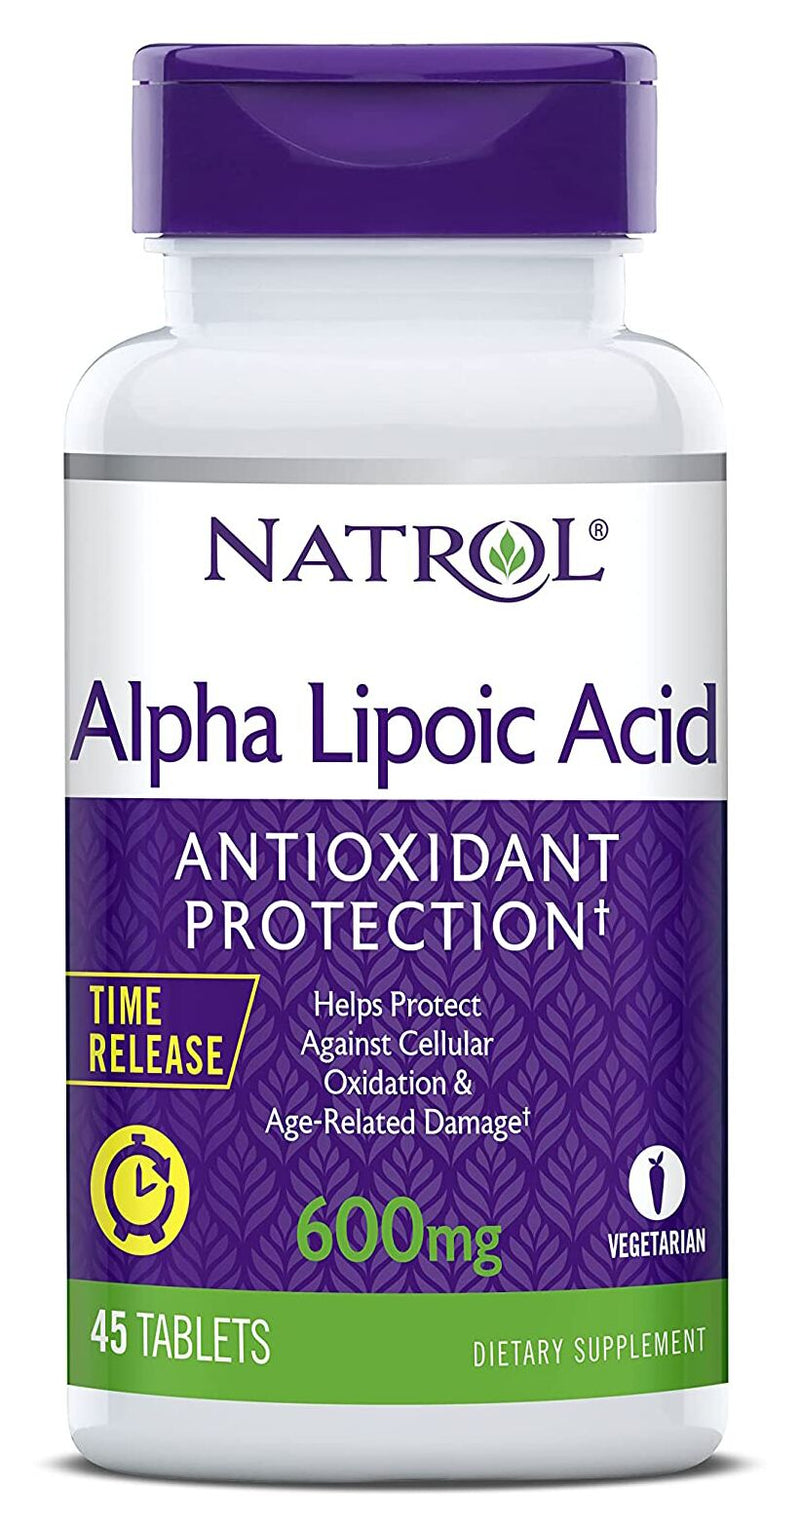 Natrol Alpha Lipoic Acid, Time Release 45 tablets 